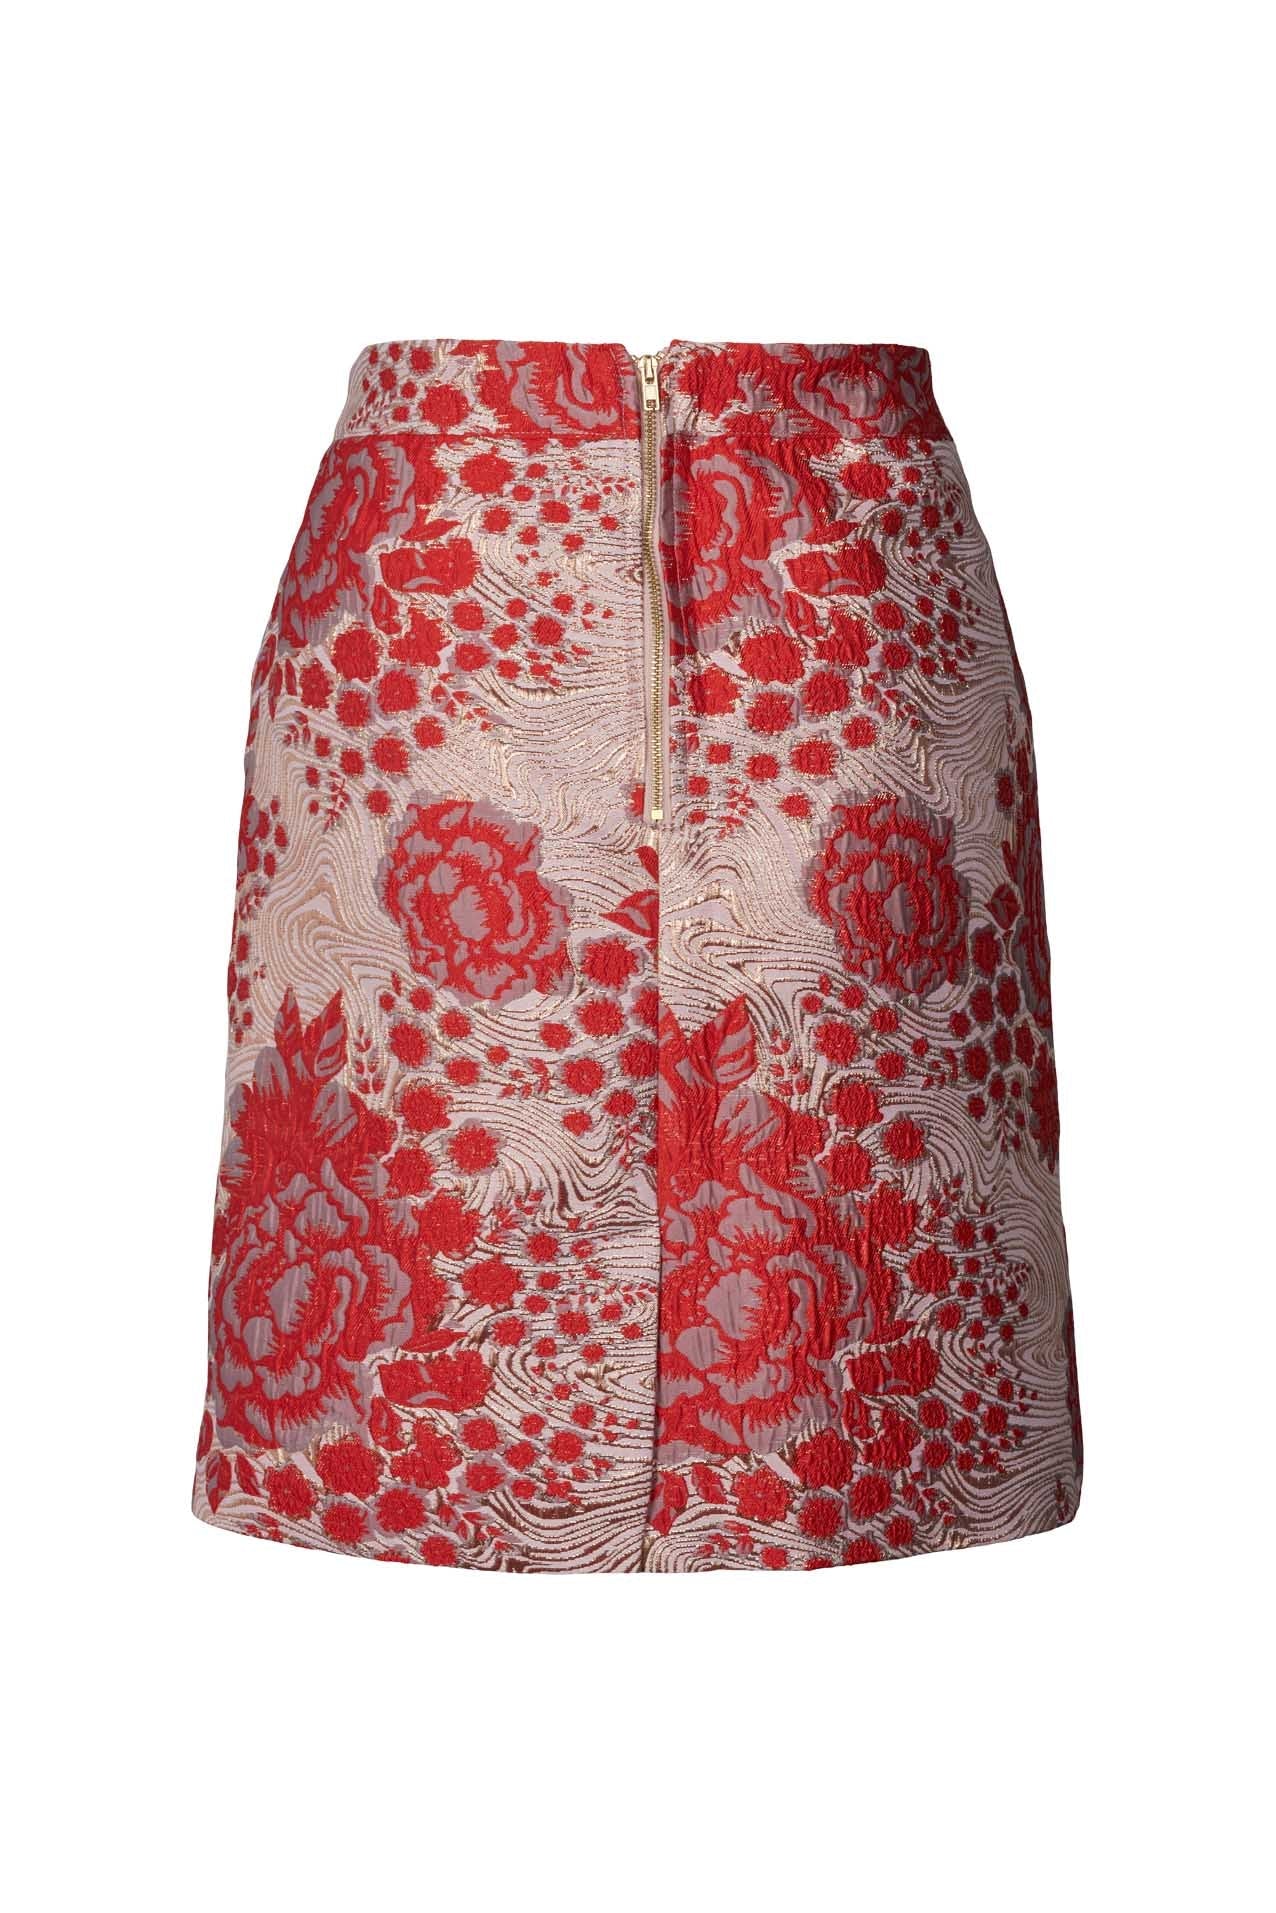 Lollys Laundry Aqua Skirt - Coral